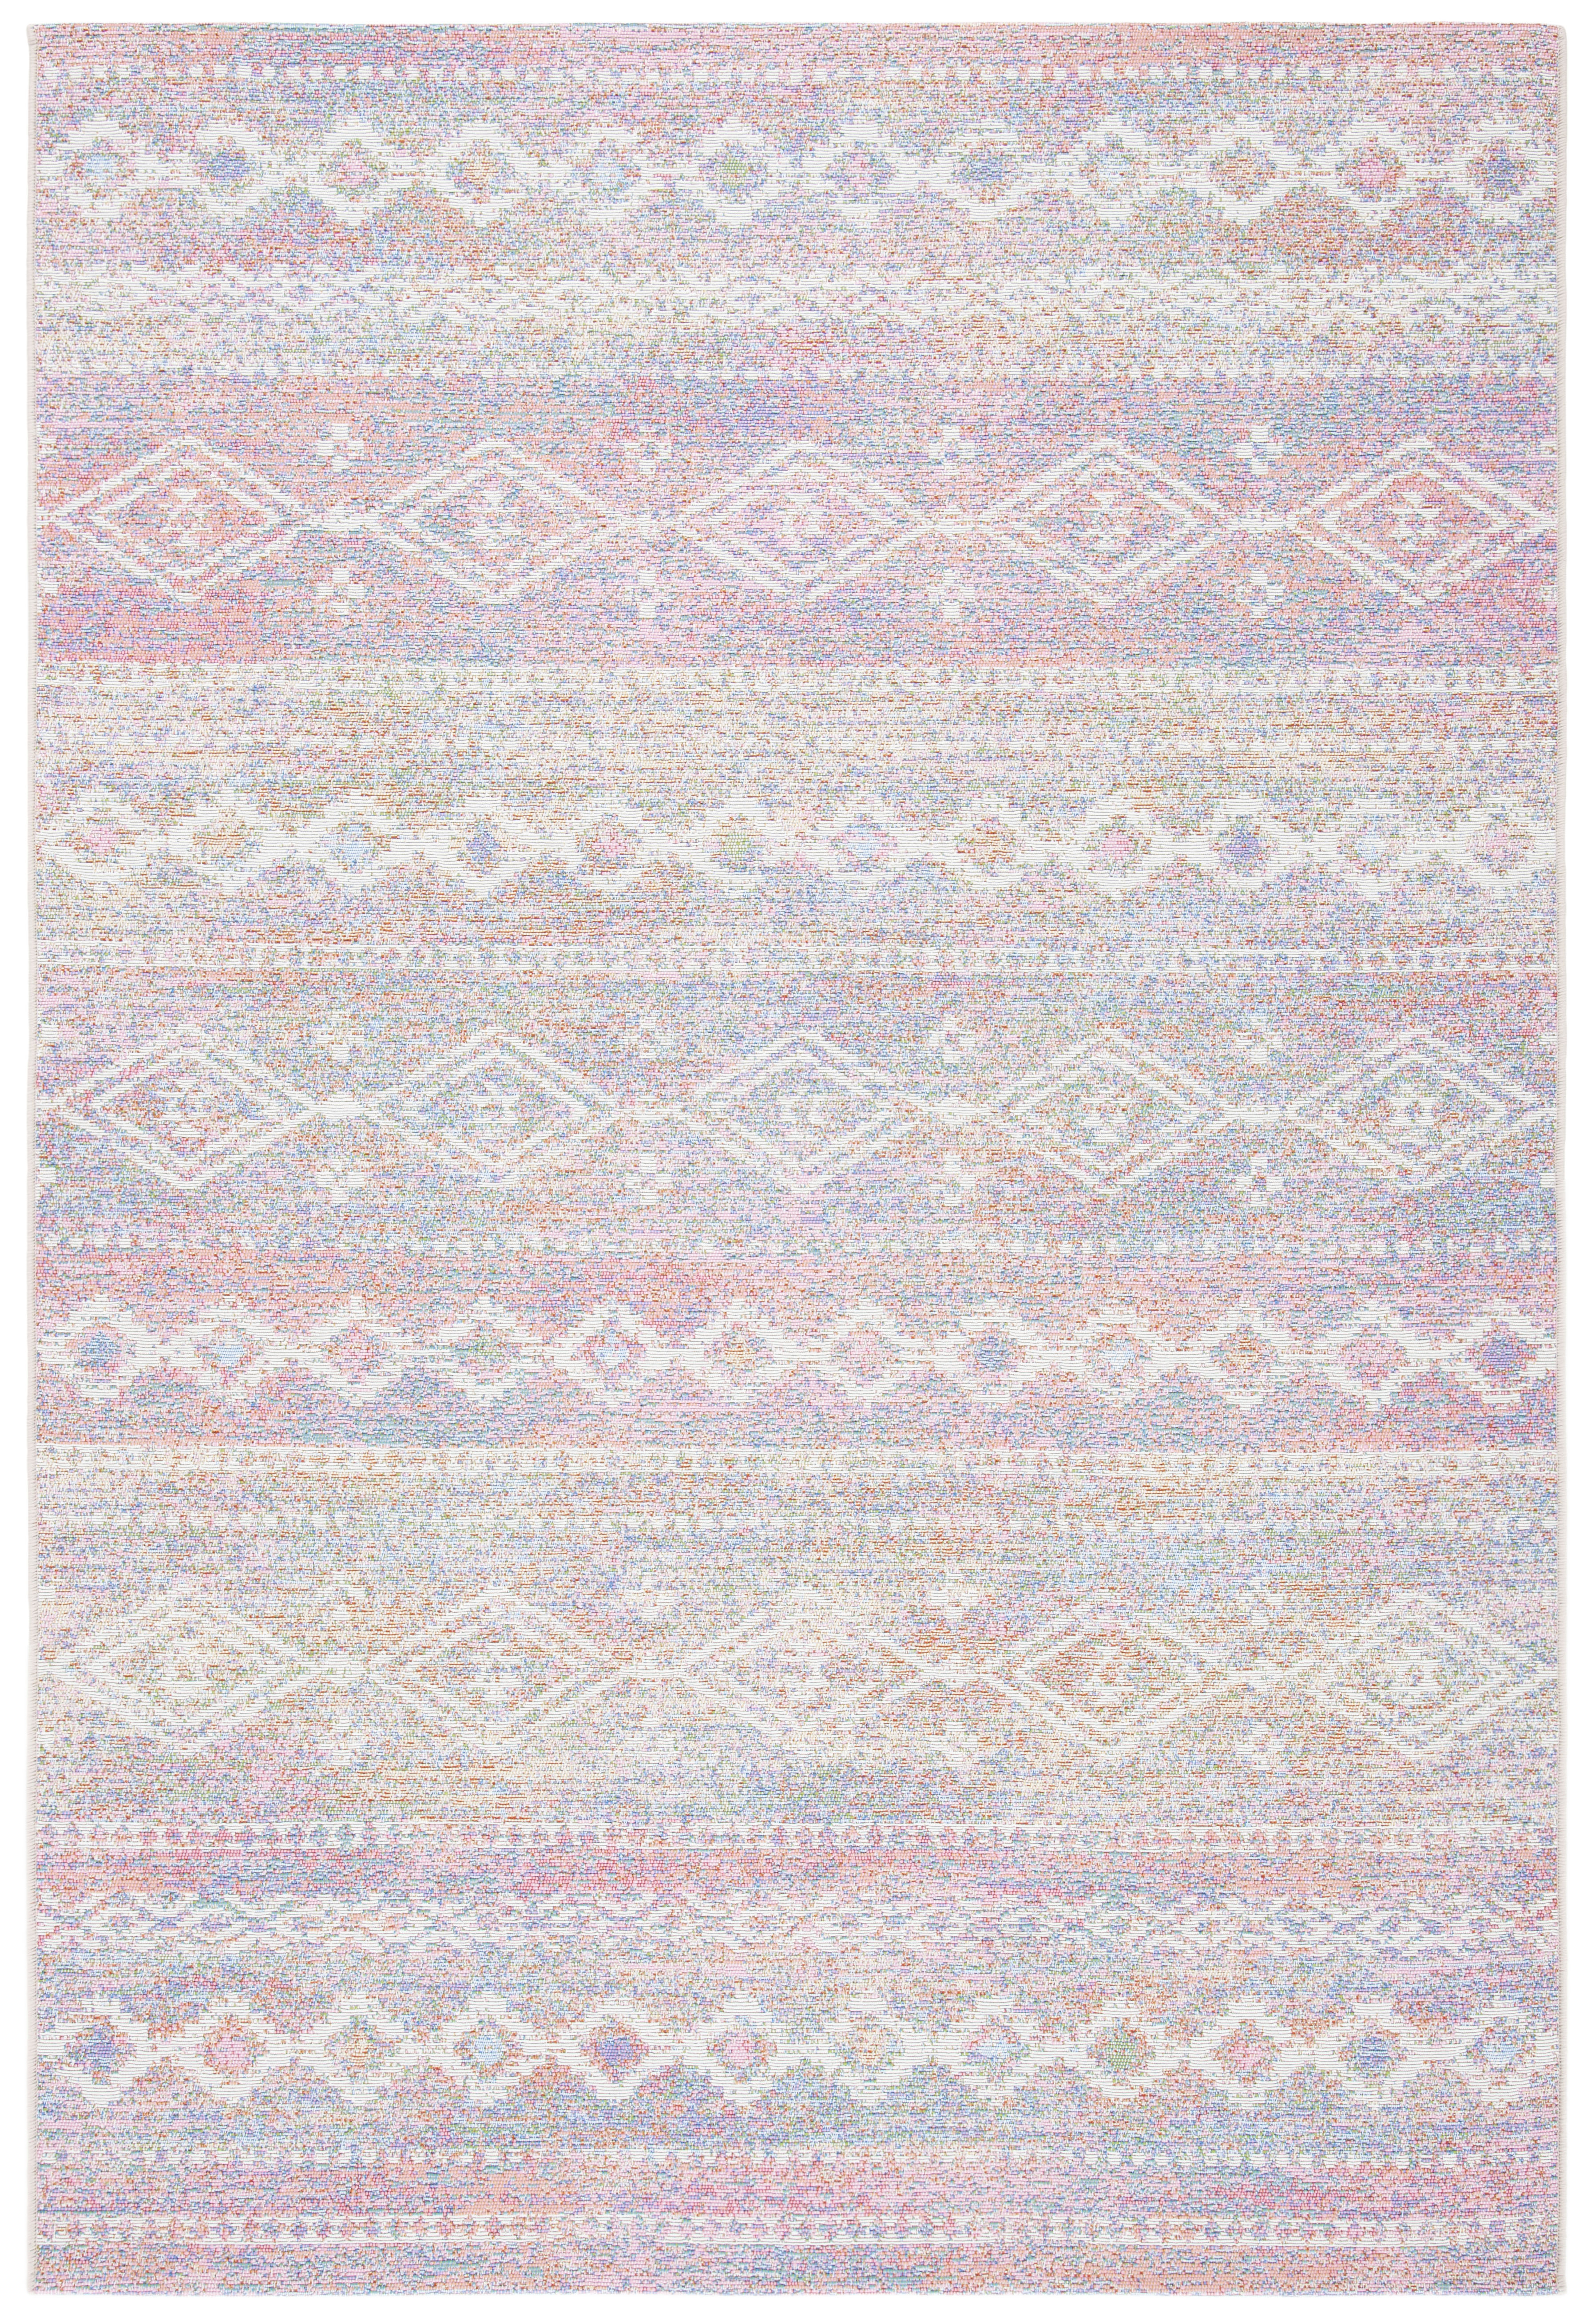 Safavieh Summer Zoja Outdoor Geometric Distressed Area Rug, Ivory/Pink, 5'3" x 7'6" - image 2 of 6